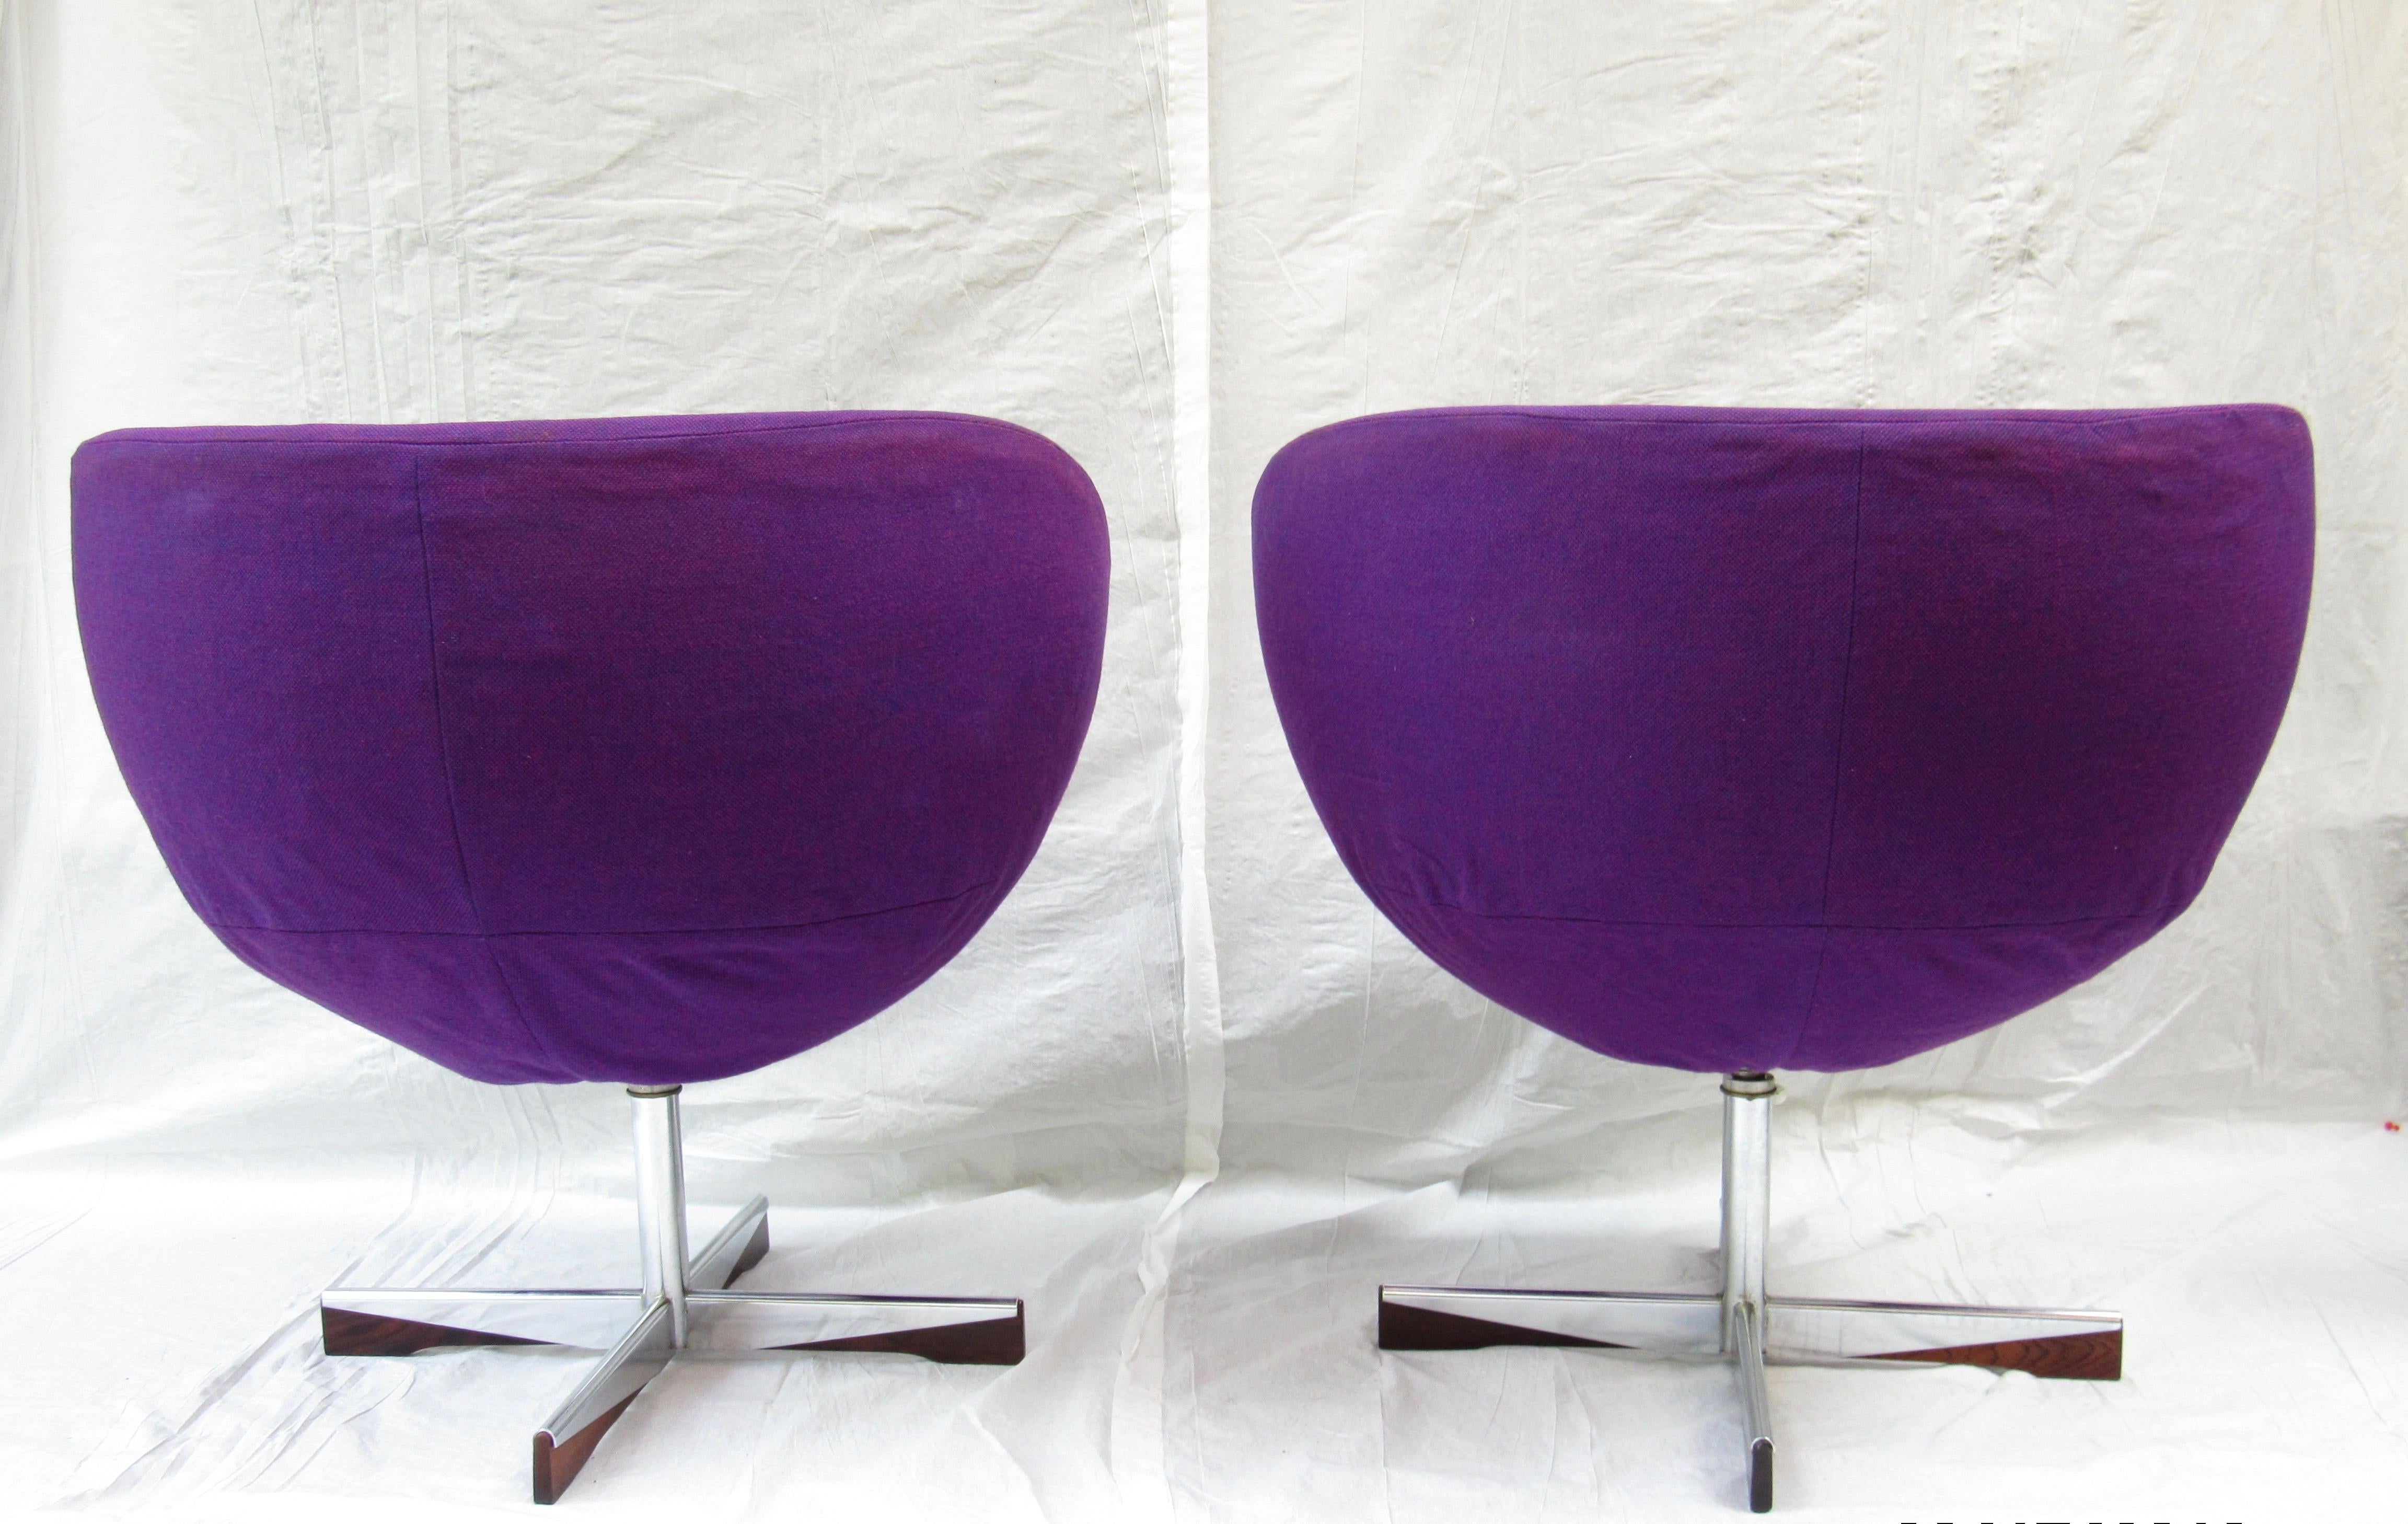 Beveled 1960s Planet Chairs by Sven Ivar Dysthe for Westnova, 1968